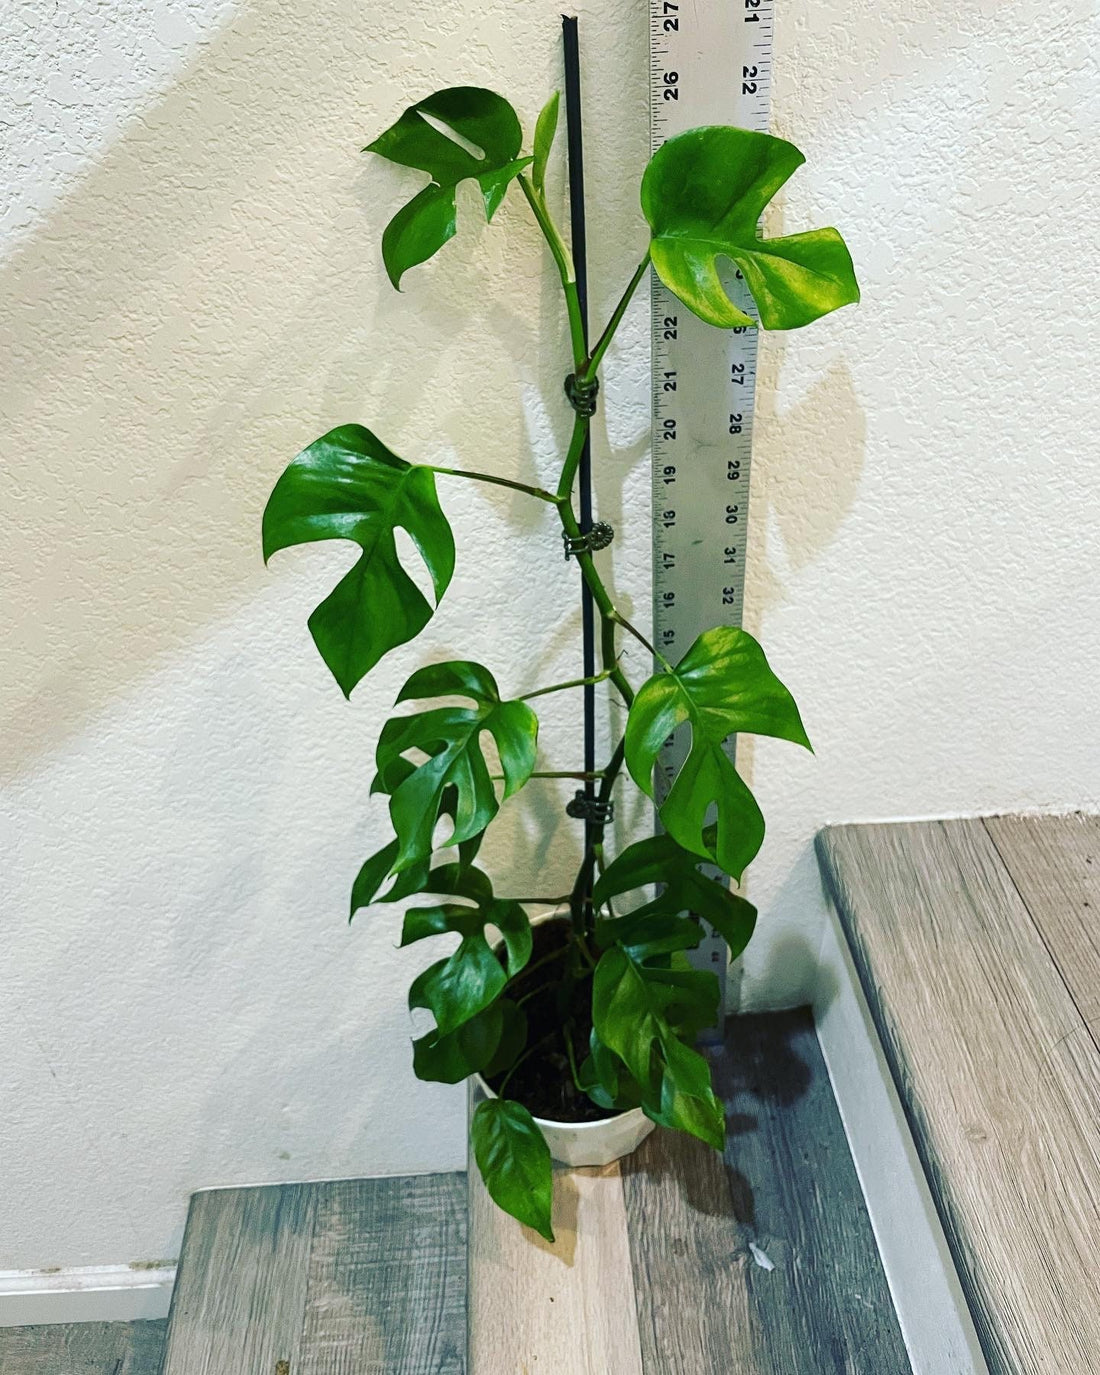 2ft tall trellised on bamboo pole -mini Monstera - Rhaphidophora tetrasperma- similar to picture -mature leaves with fenestration